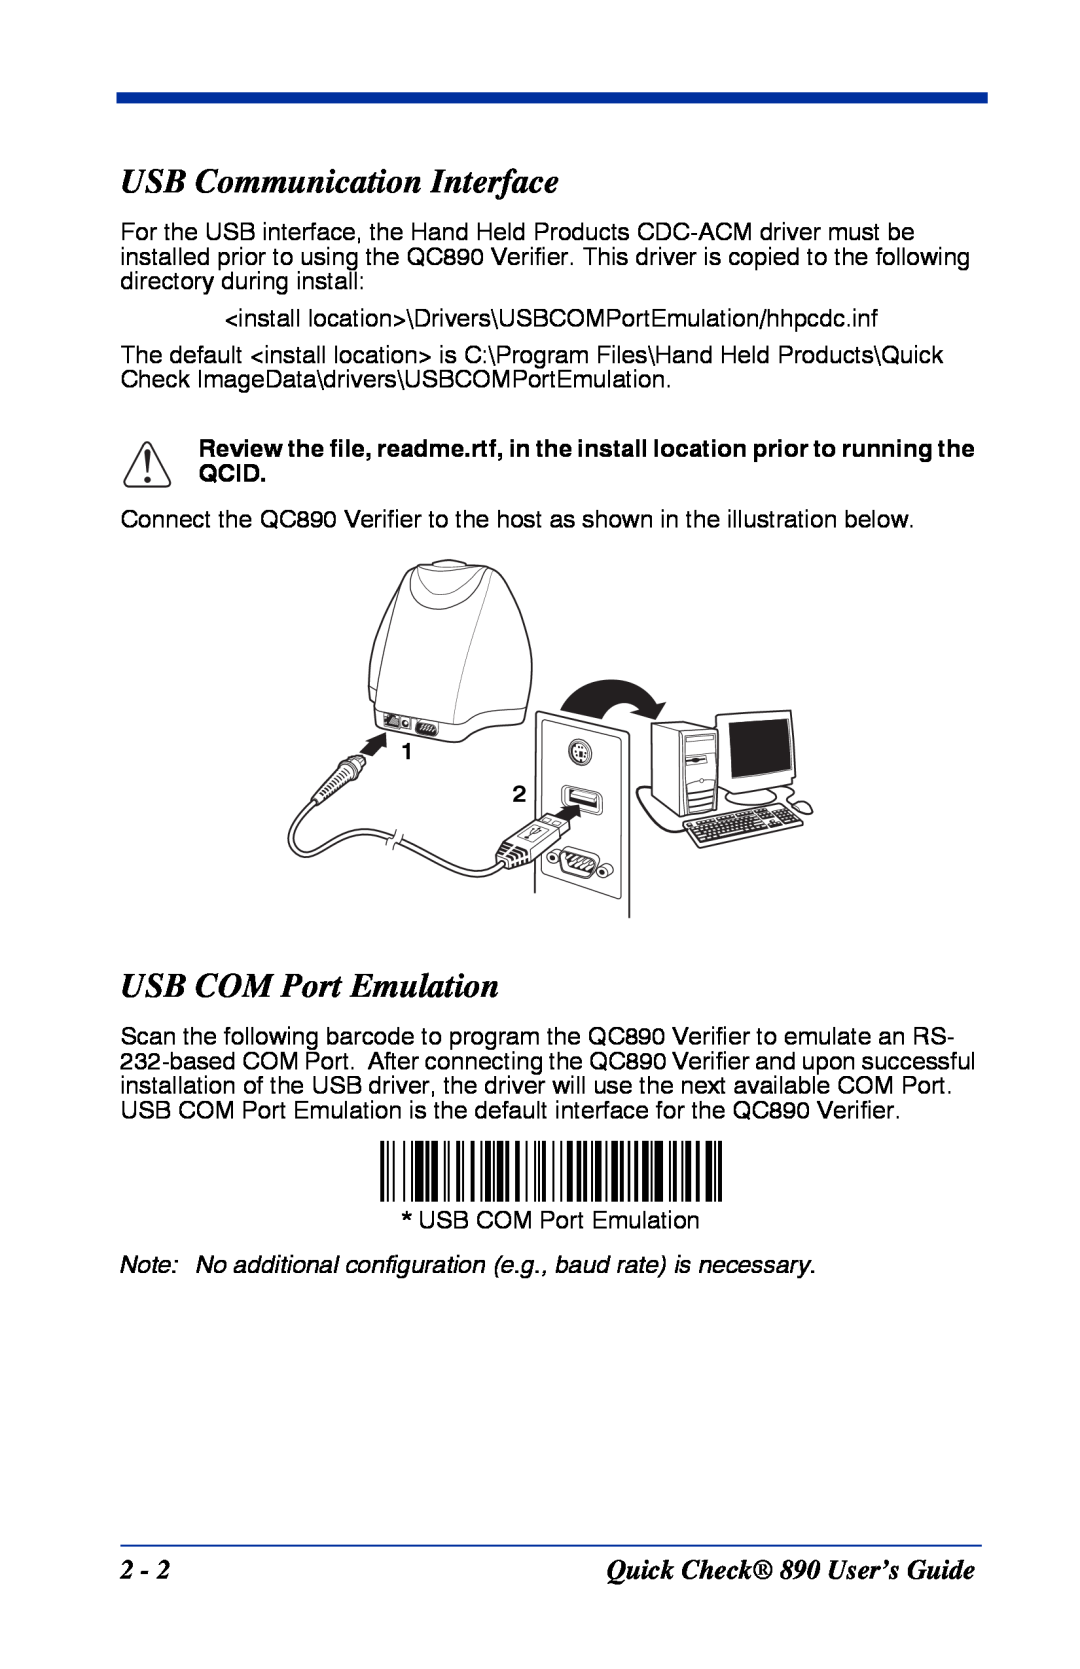 HandHeld Entertainment manual USB Communication Interface, USB COM Port Emulation, Quick Check 890 User’s Guide 